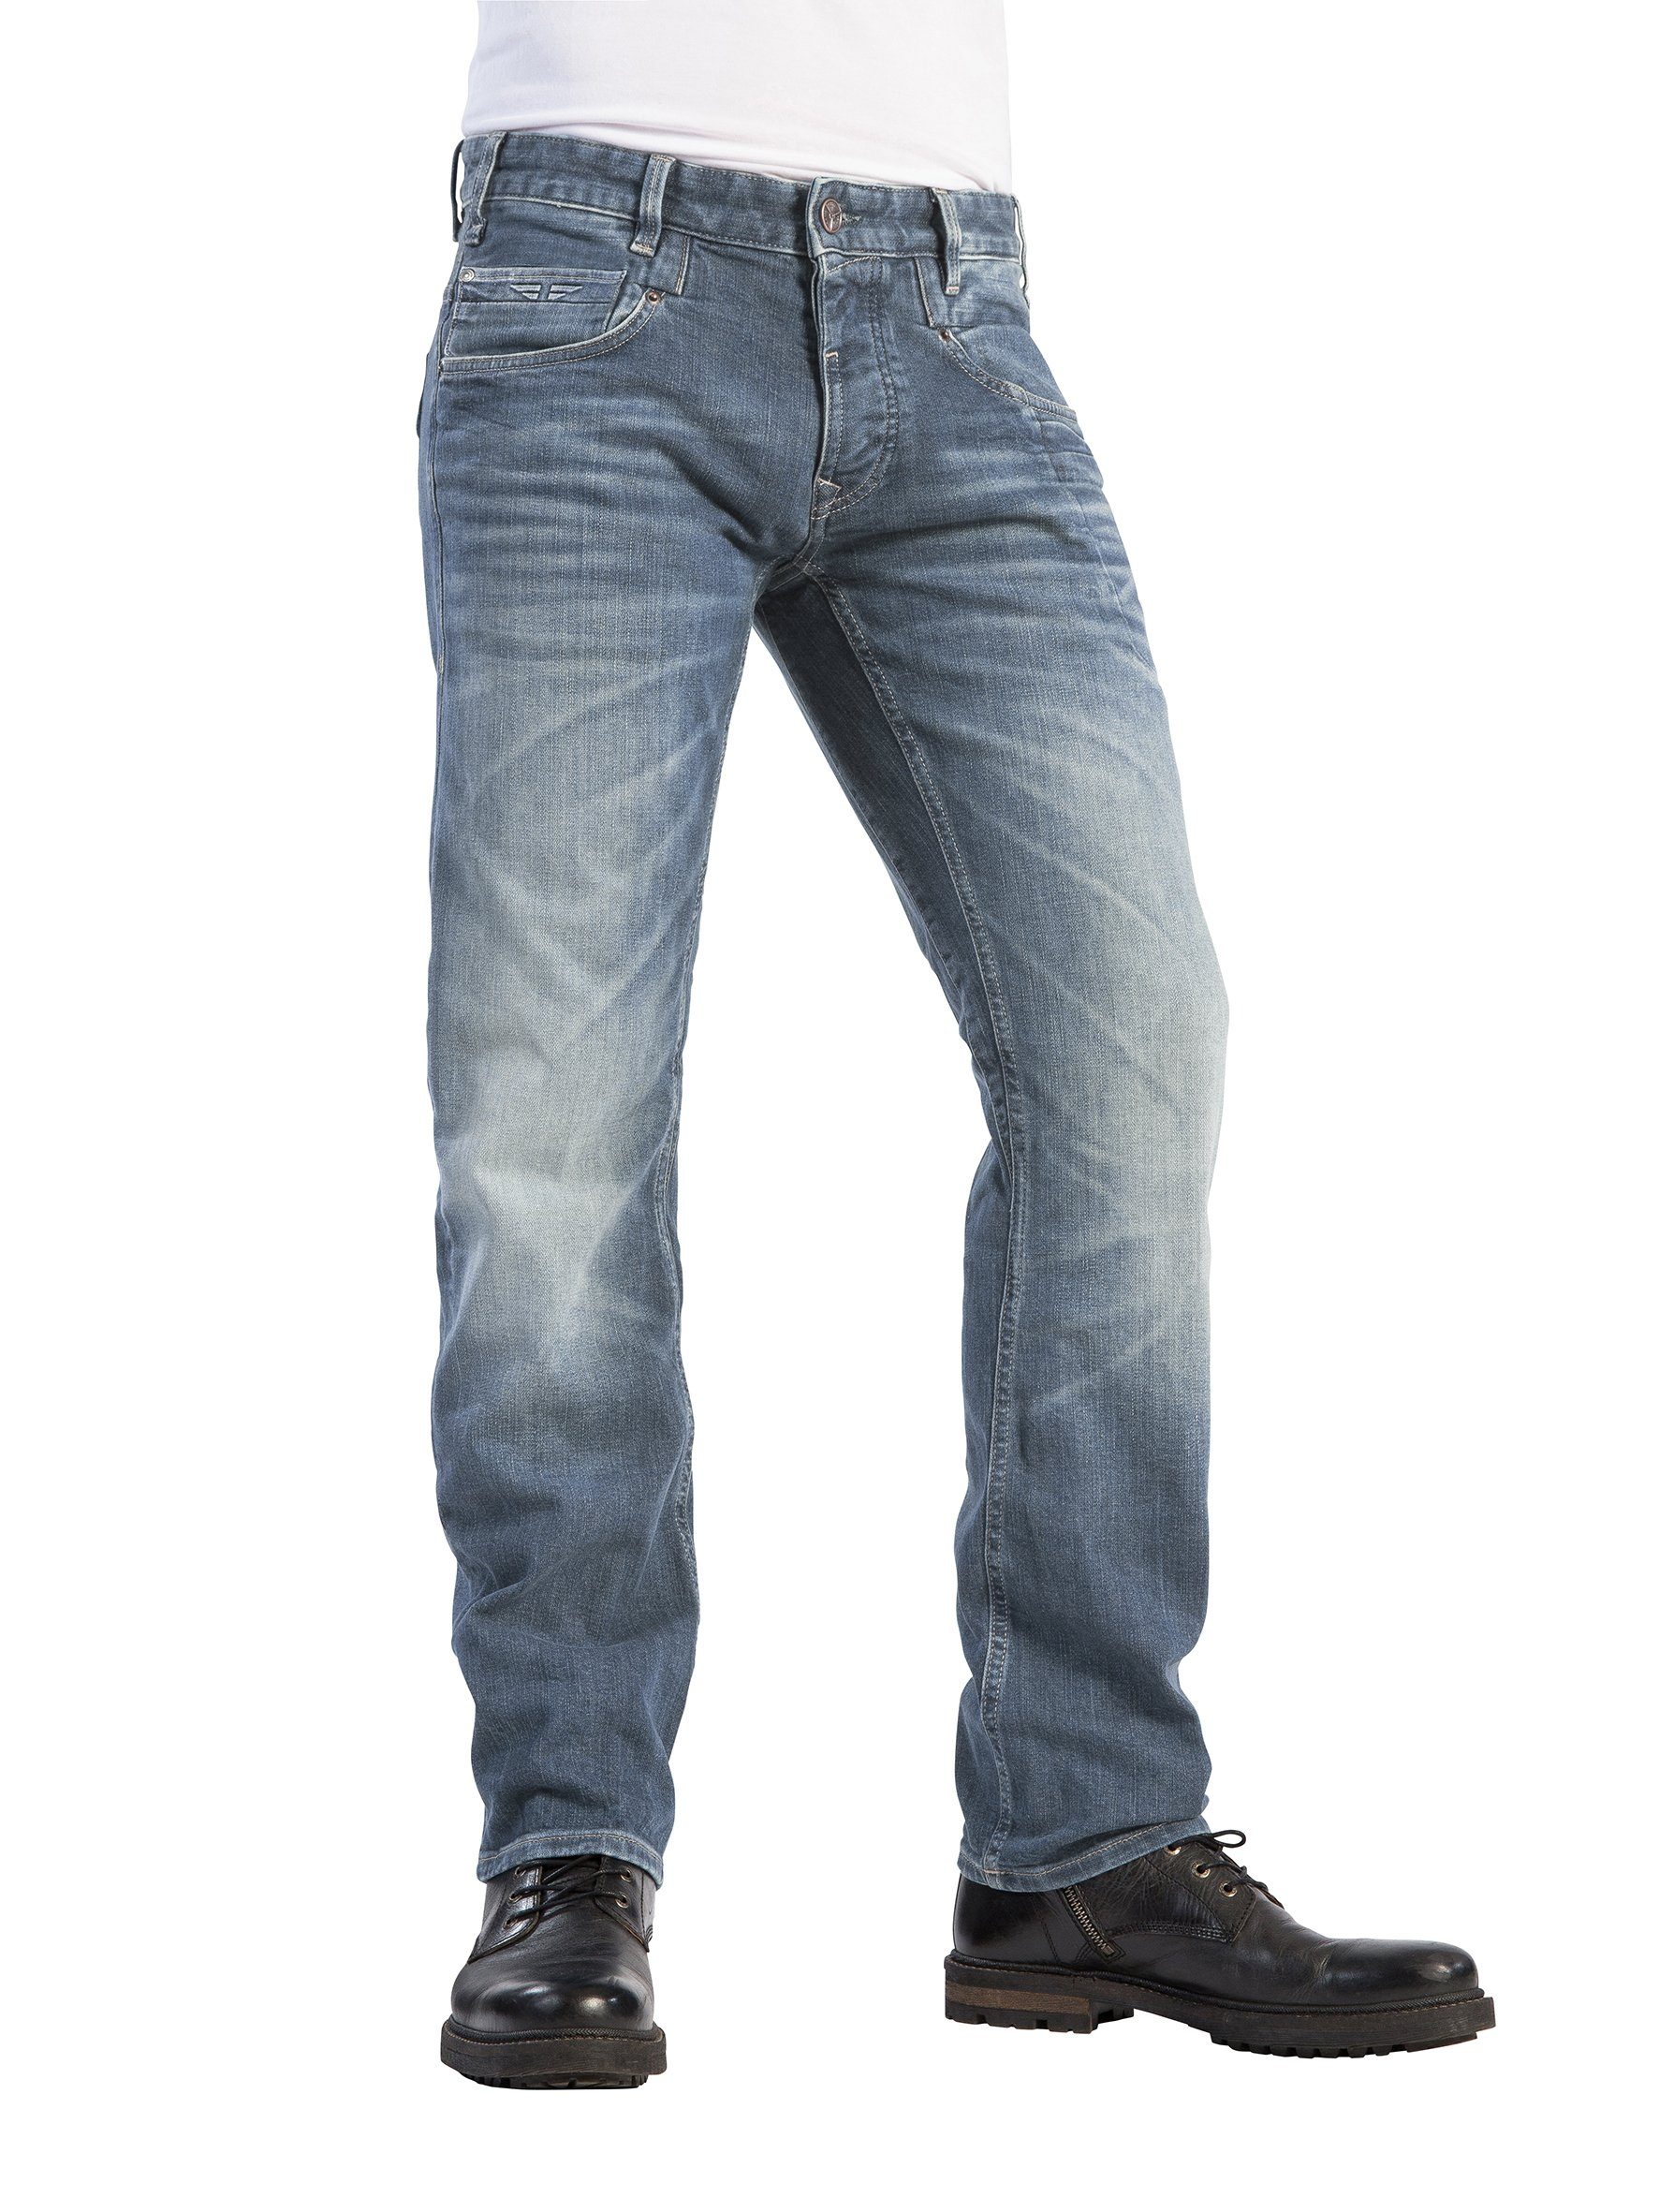 HERO by John Medoox Stretch-Jeans Baxter Heritage Herren Denim Jeans Hose -  Relaxed Fit - Bluegrey